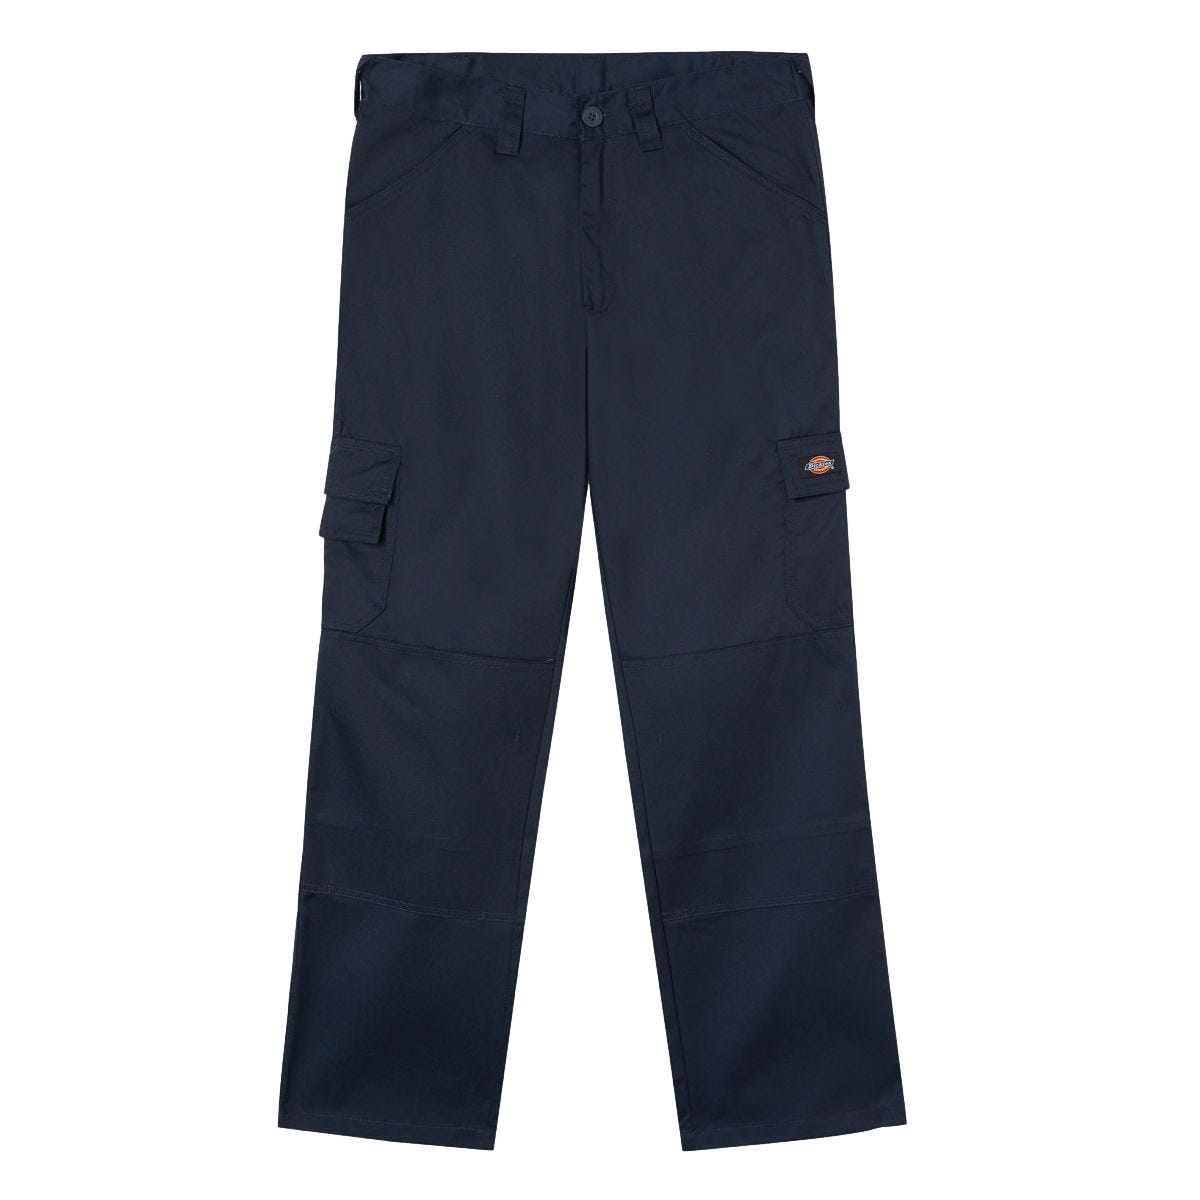 Pantalon Everyday Bleu marine - Dickies - Taille 36 0